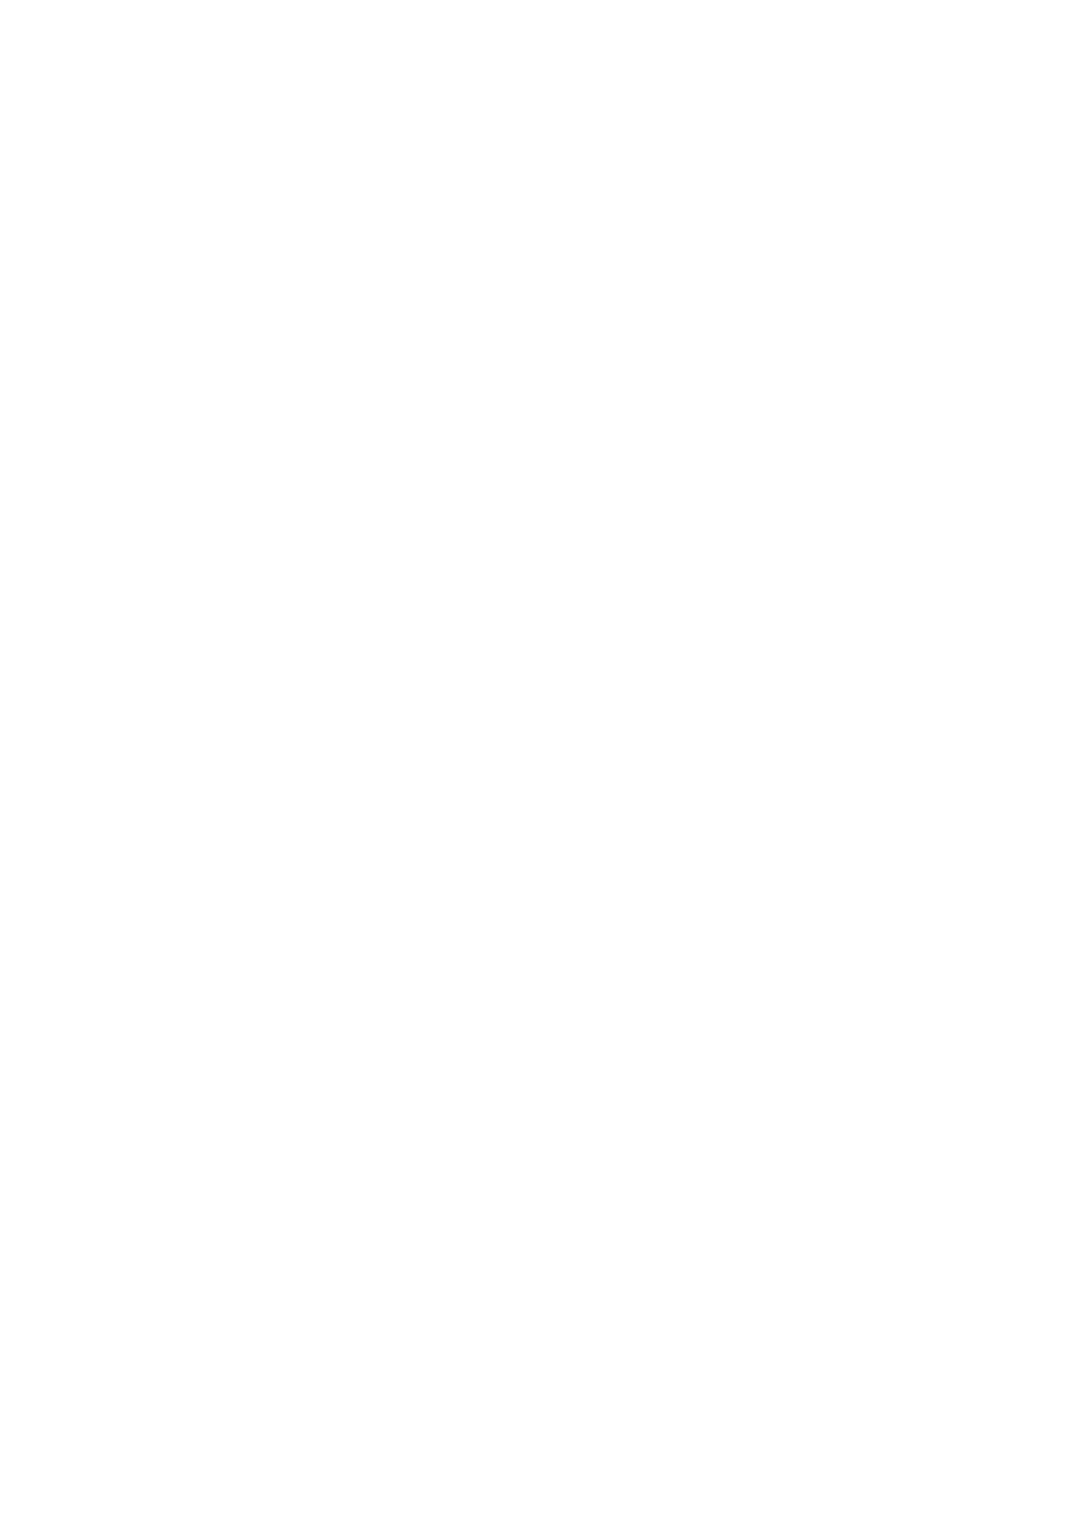 Dentsu logo pour fonds sombres (PNG transparent)